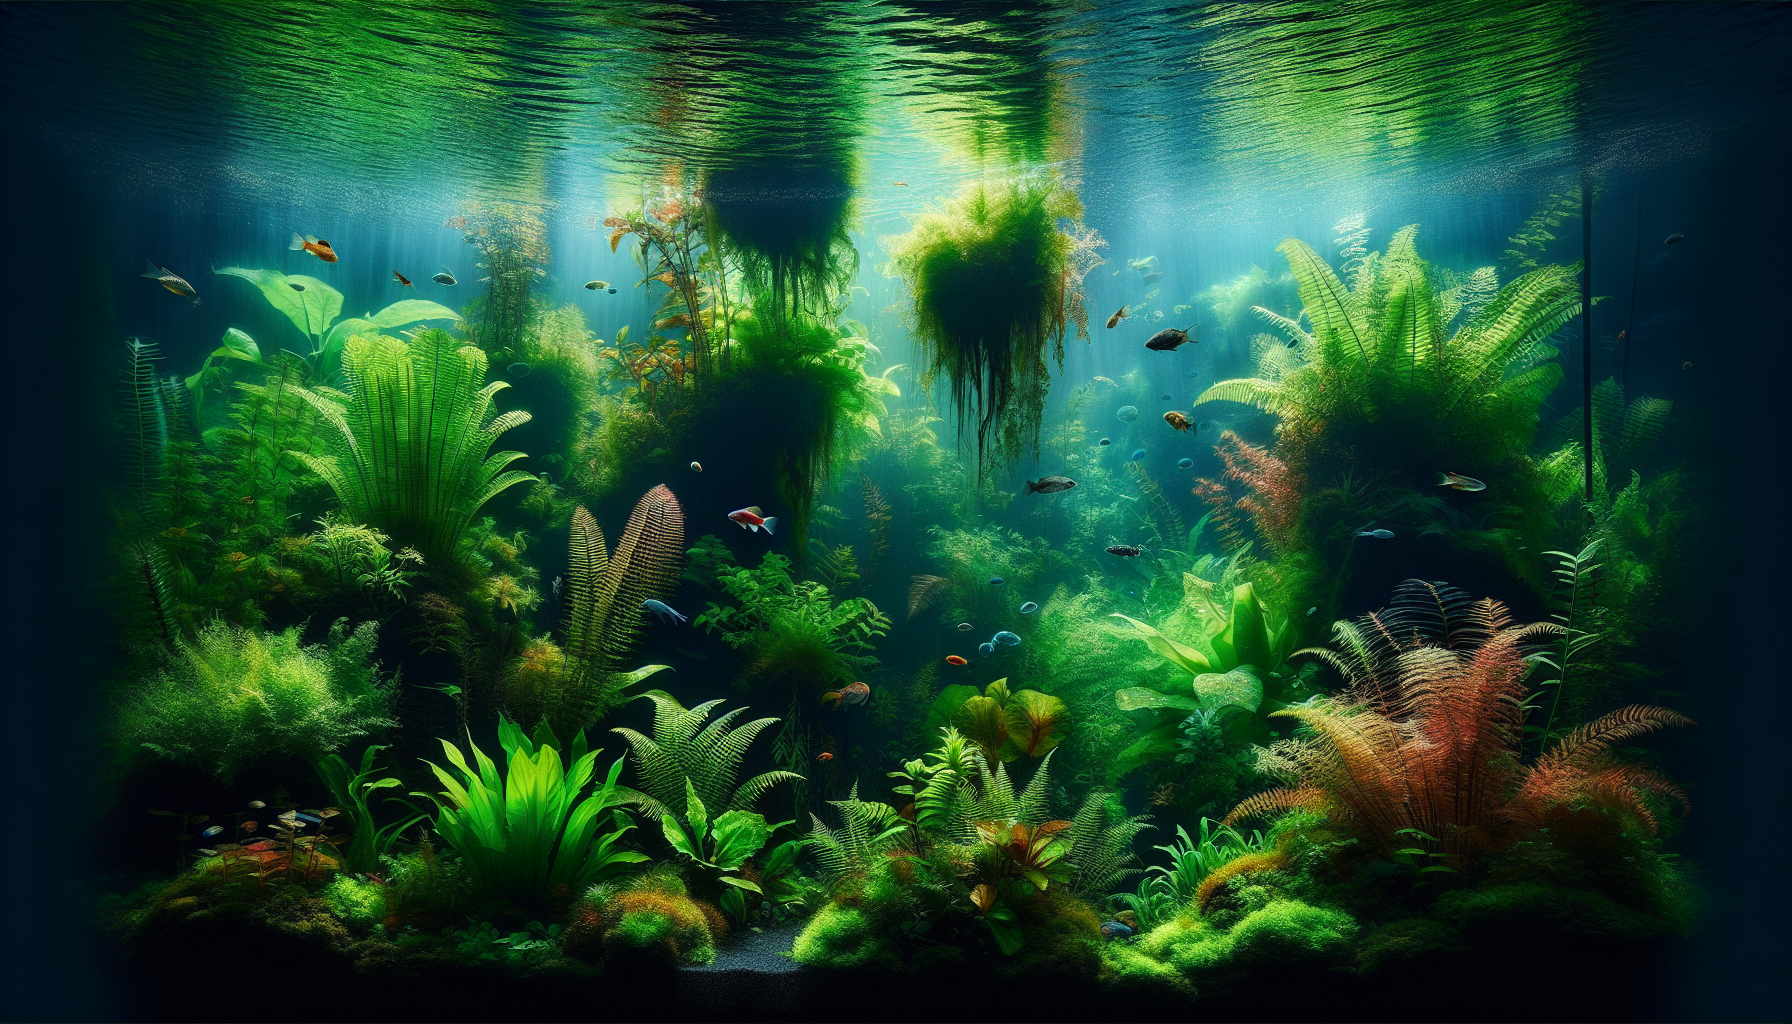 Healthy floating aquarium plants in a well-lit tank